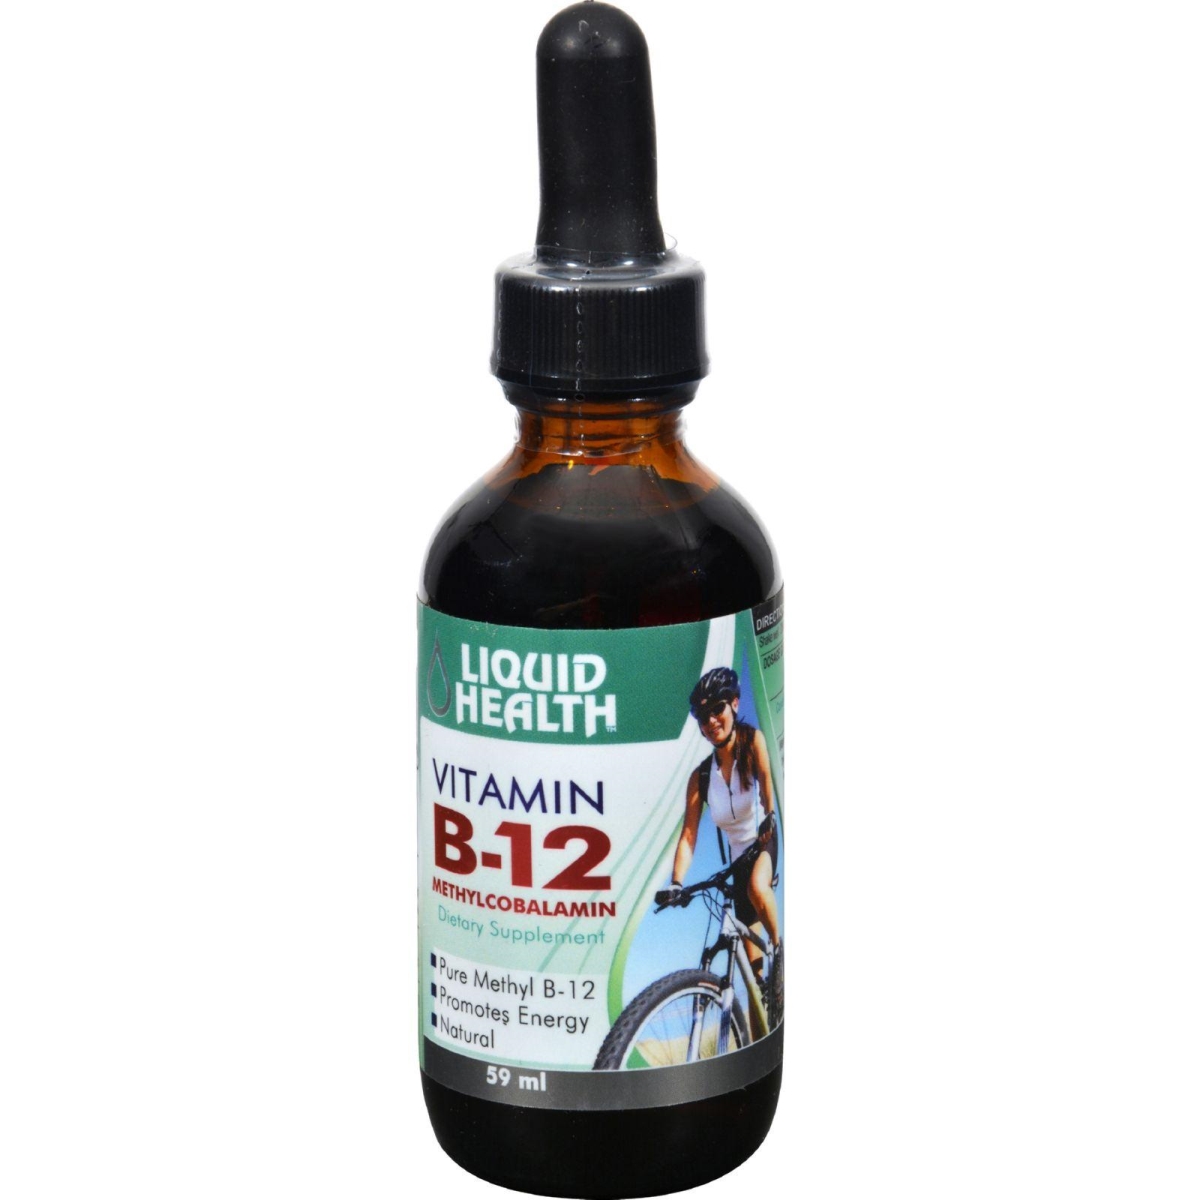 Hg0551564 20.3 Fl Oz Liquid Health Vitamin B-12